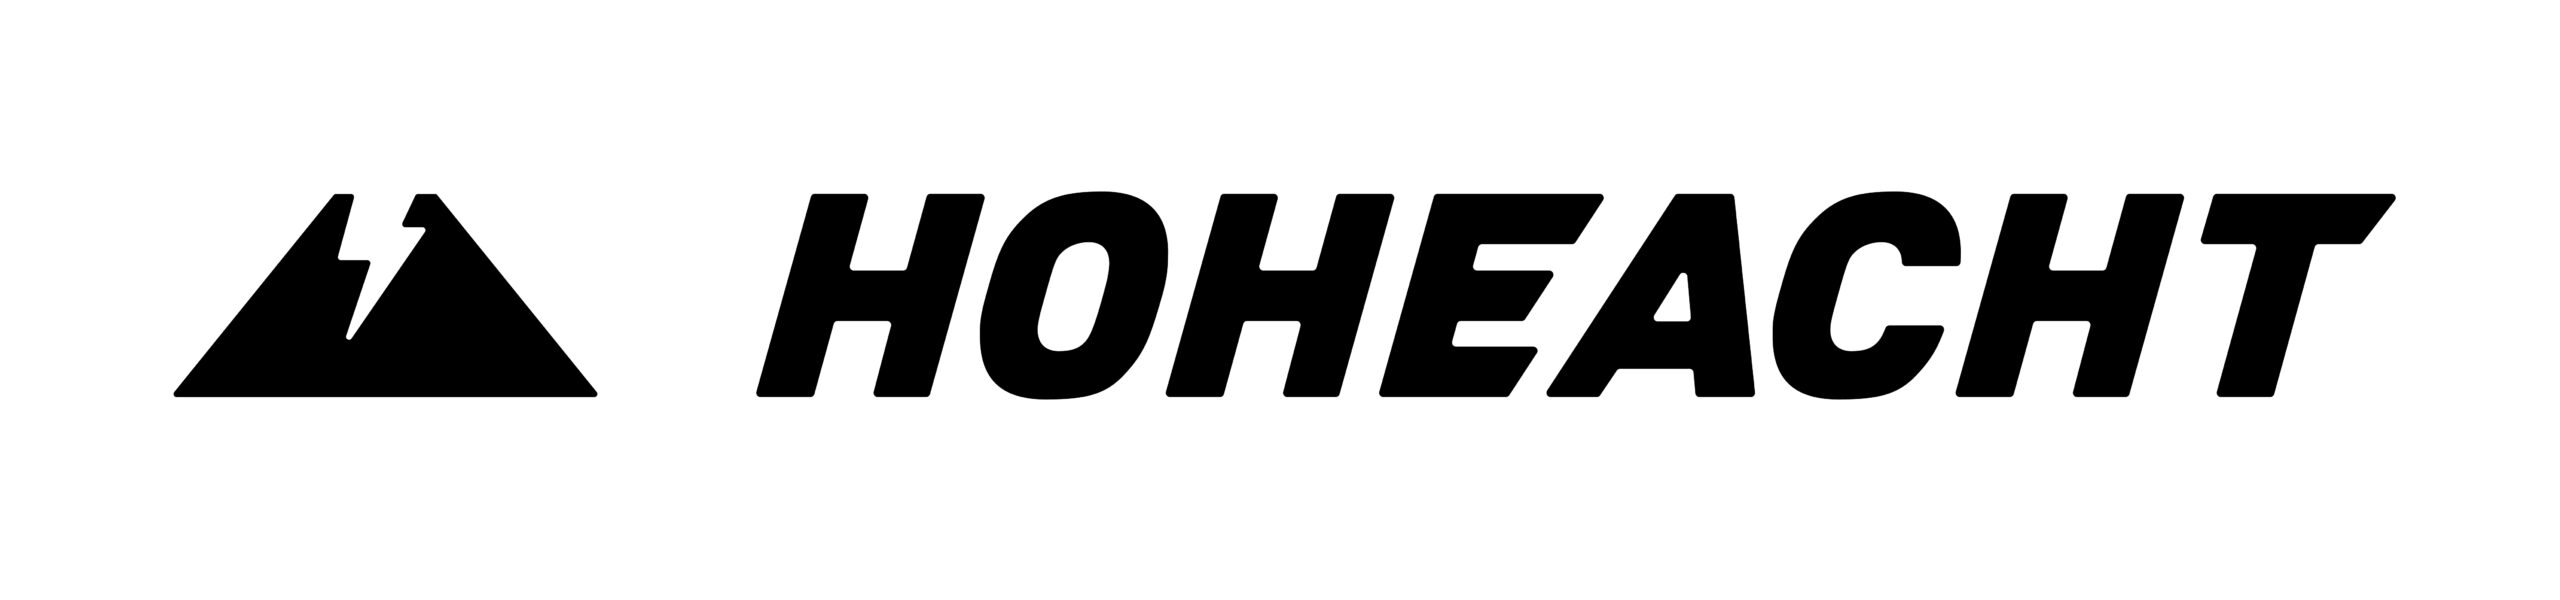 Hohe Acht Logoset 2021 01 1